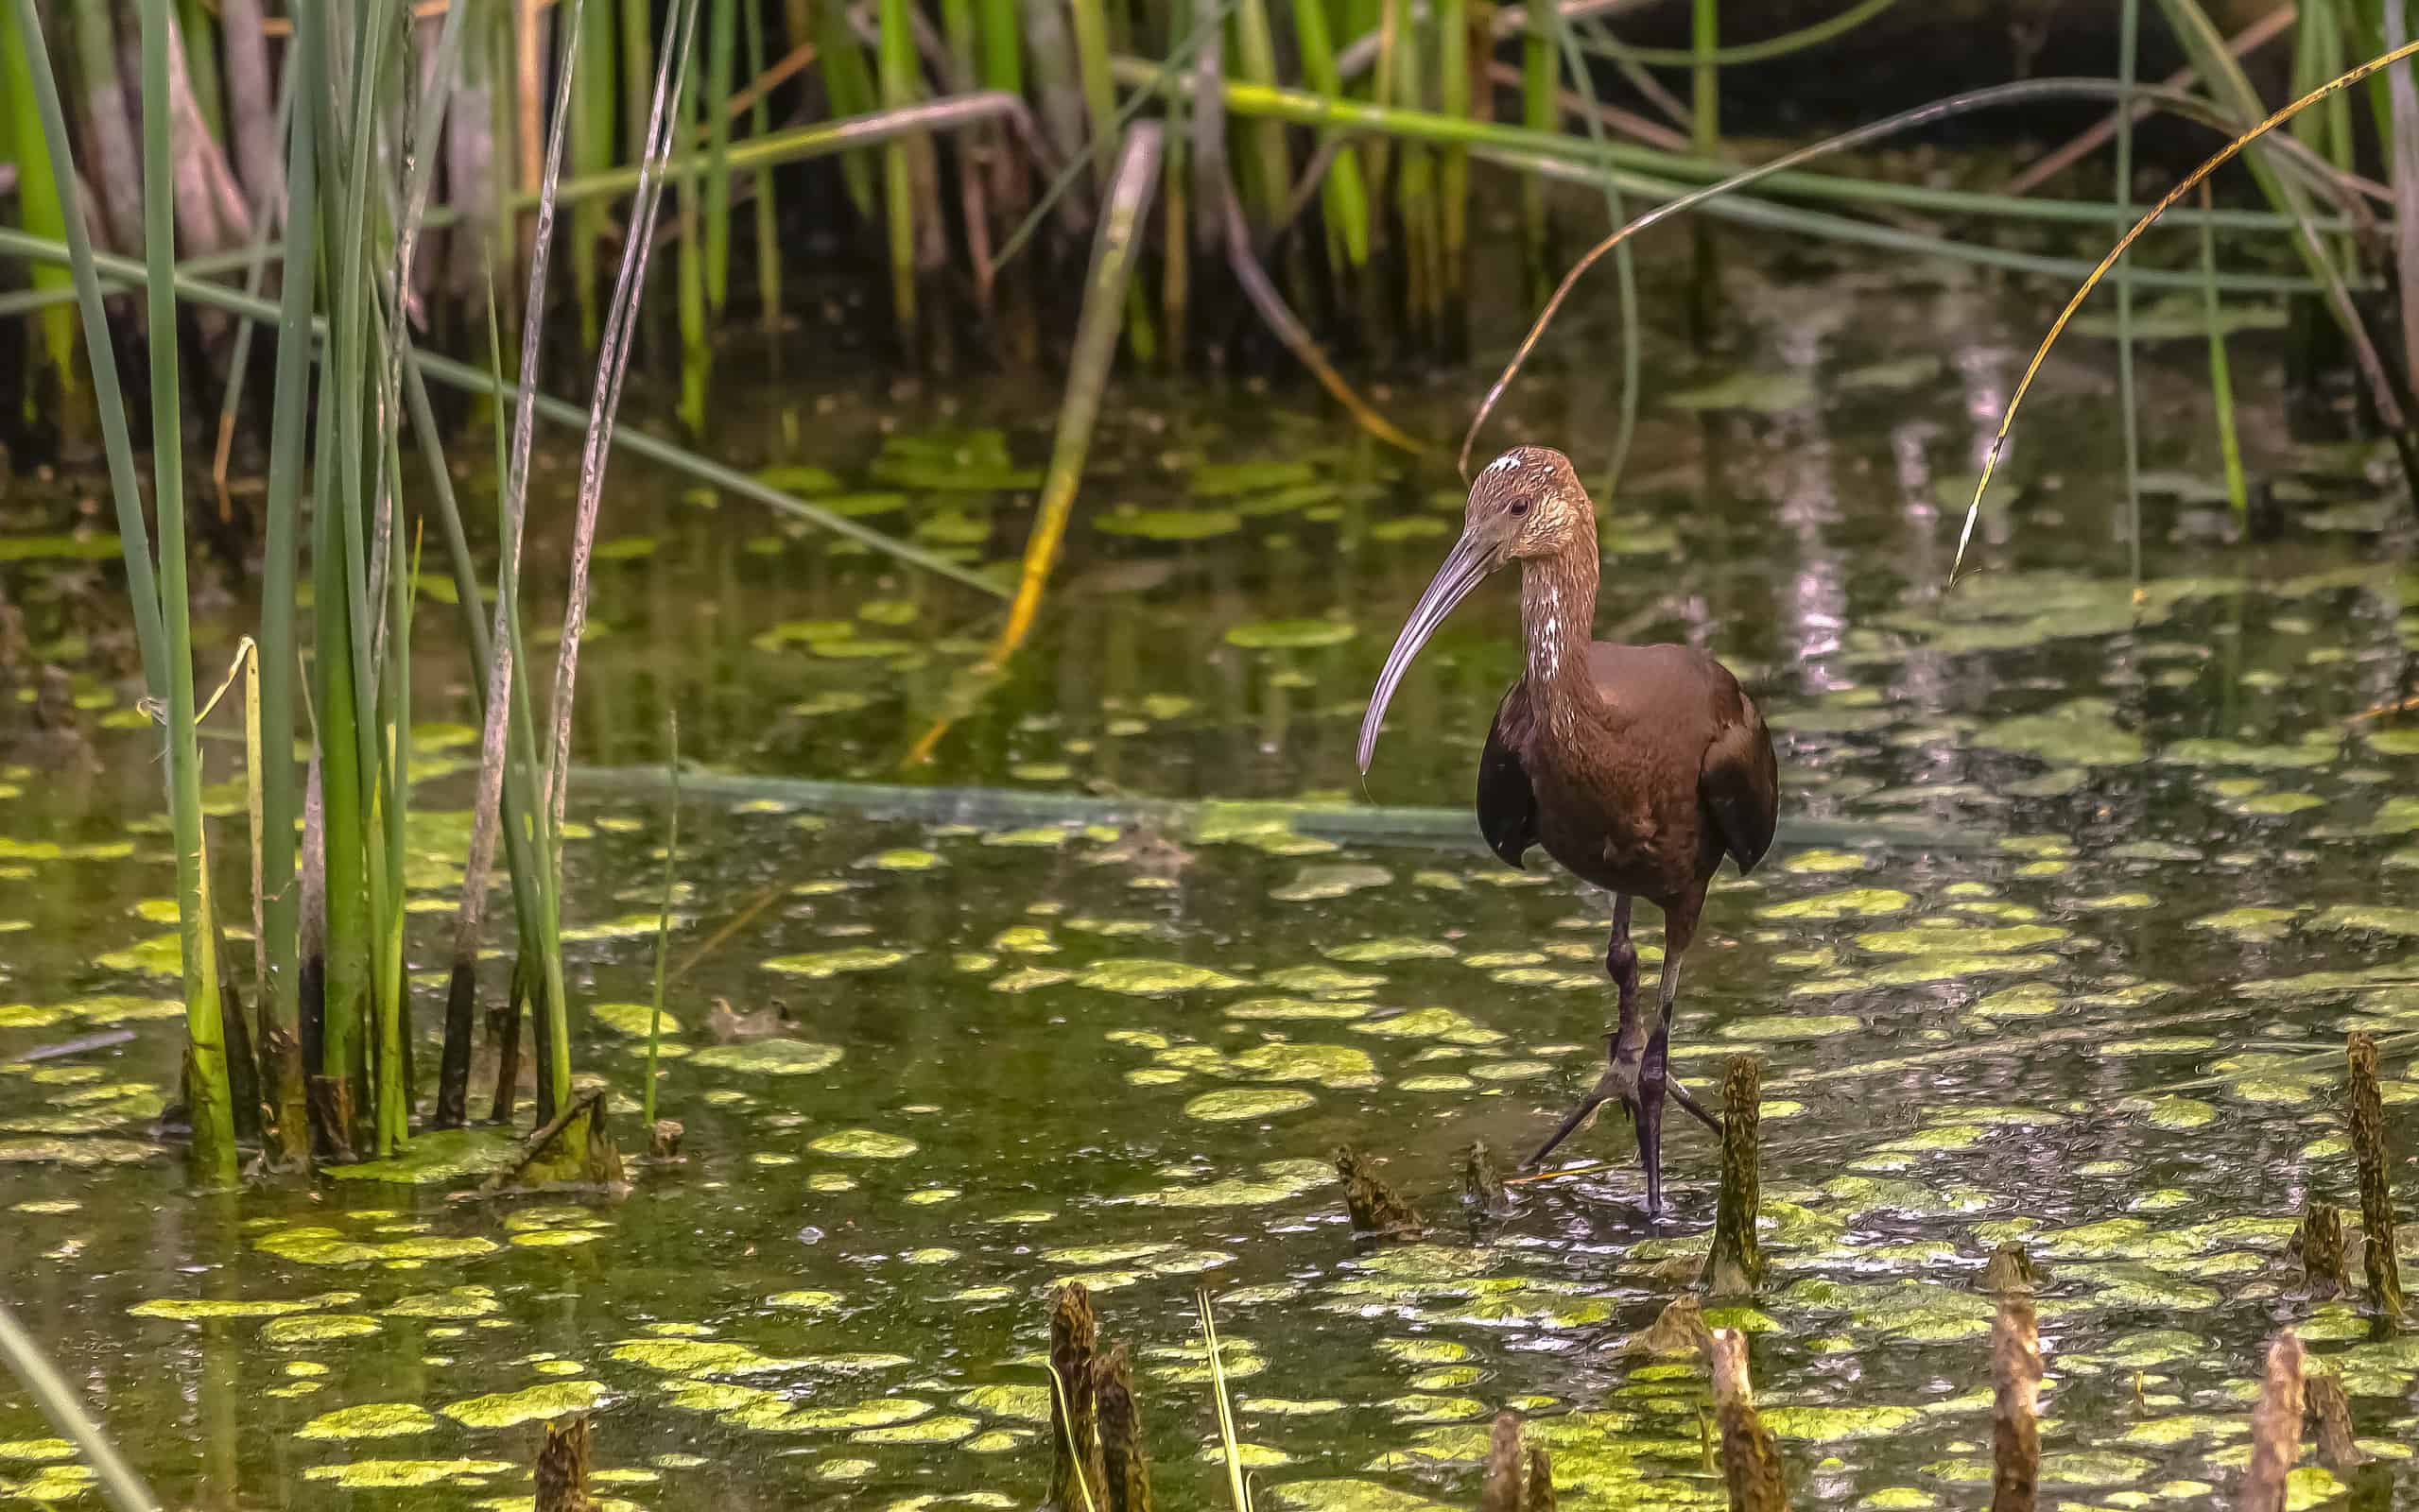 Brown bird with long sharp beak in Lake Utah